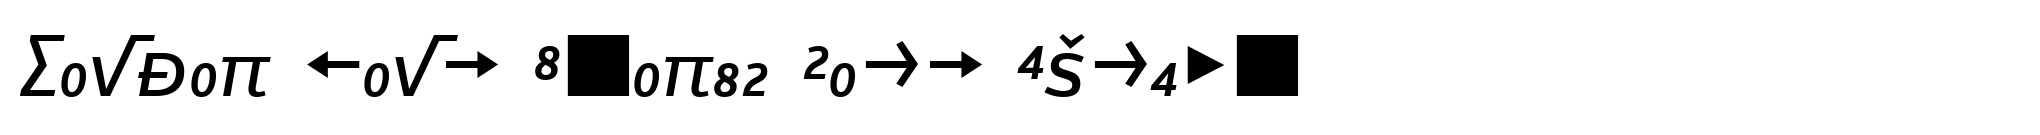 Manual Sans Italic Caps Expert image